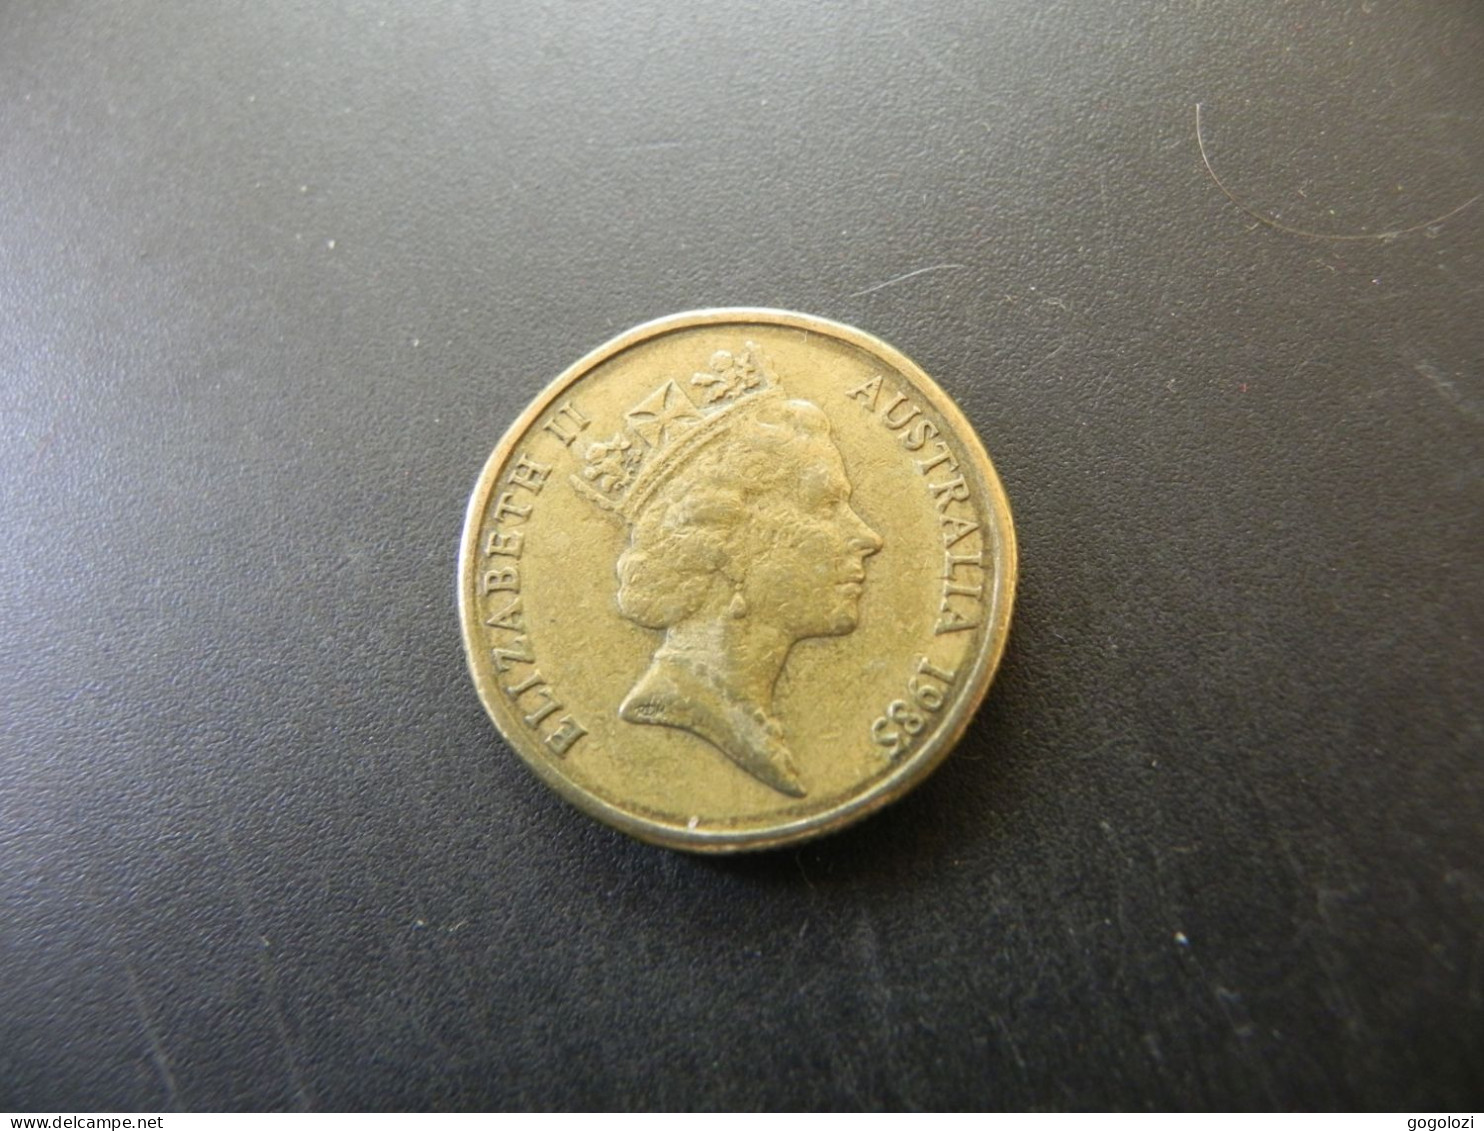 Australia 1 Dollar 1985 - Dollar